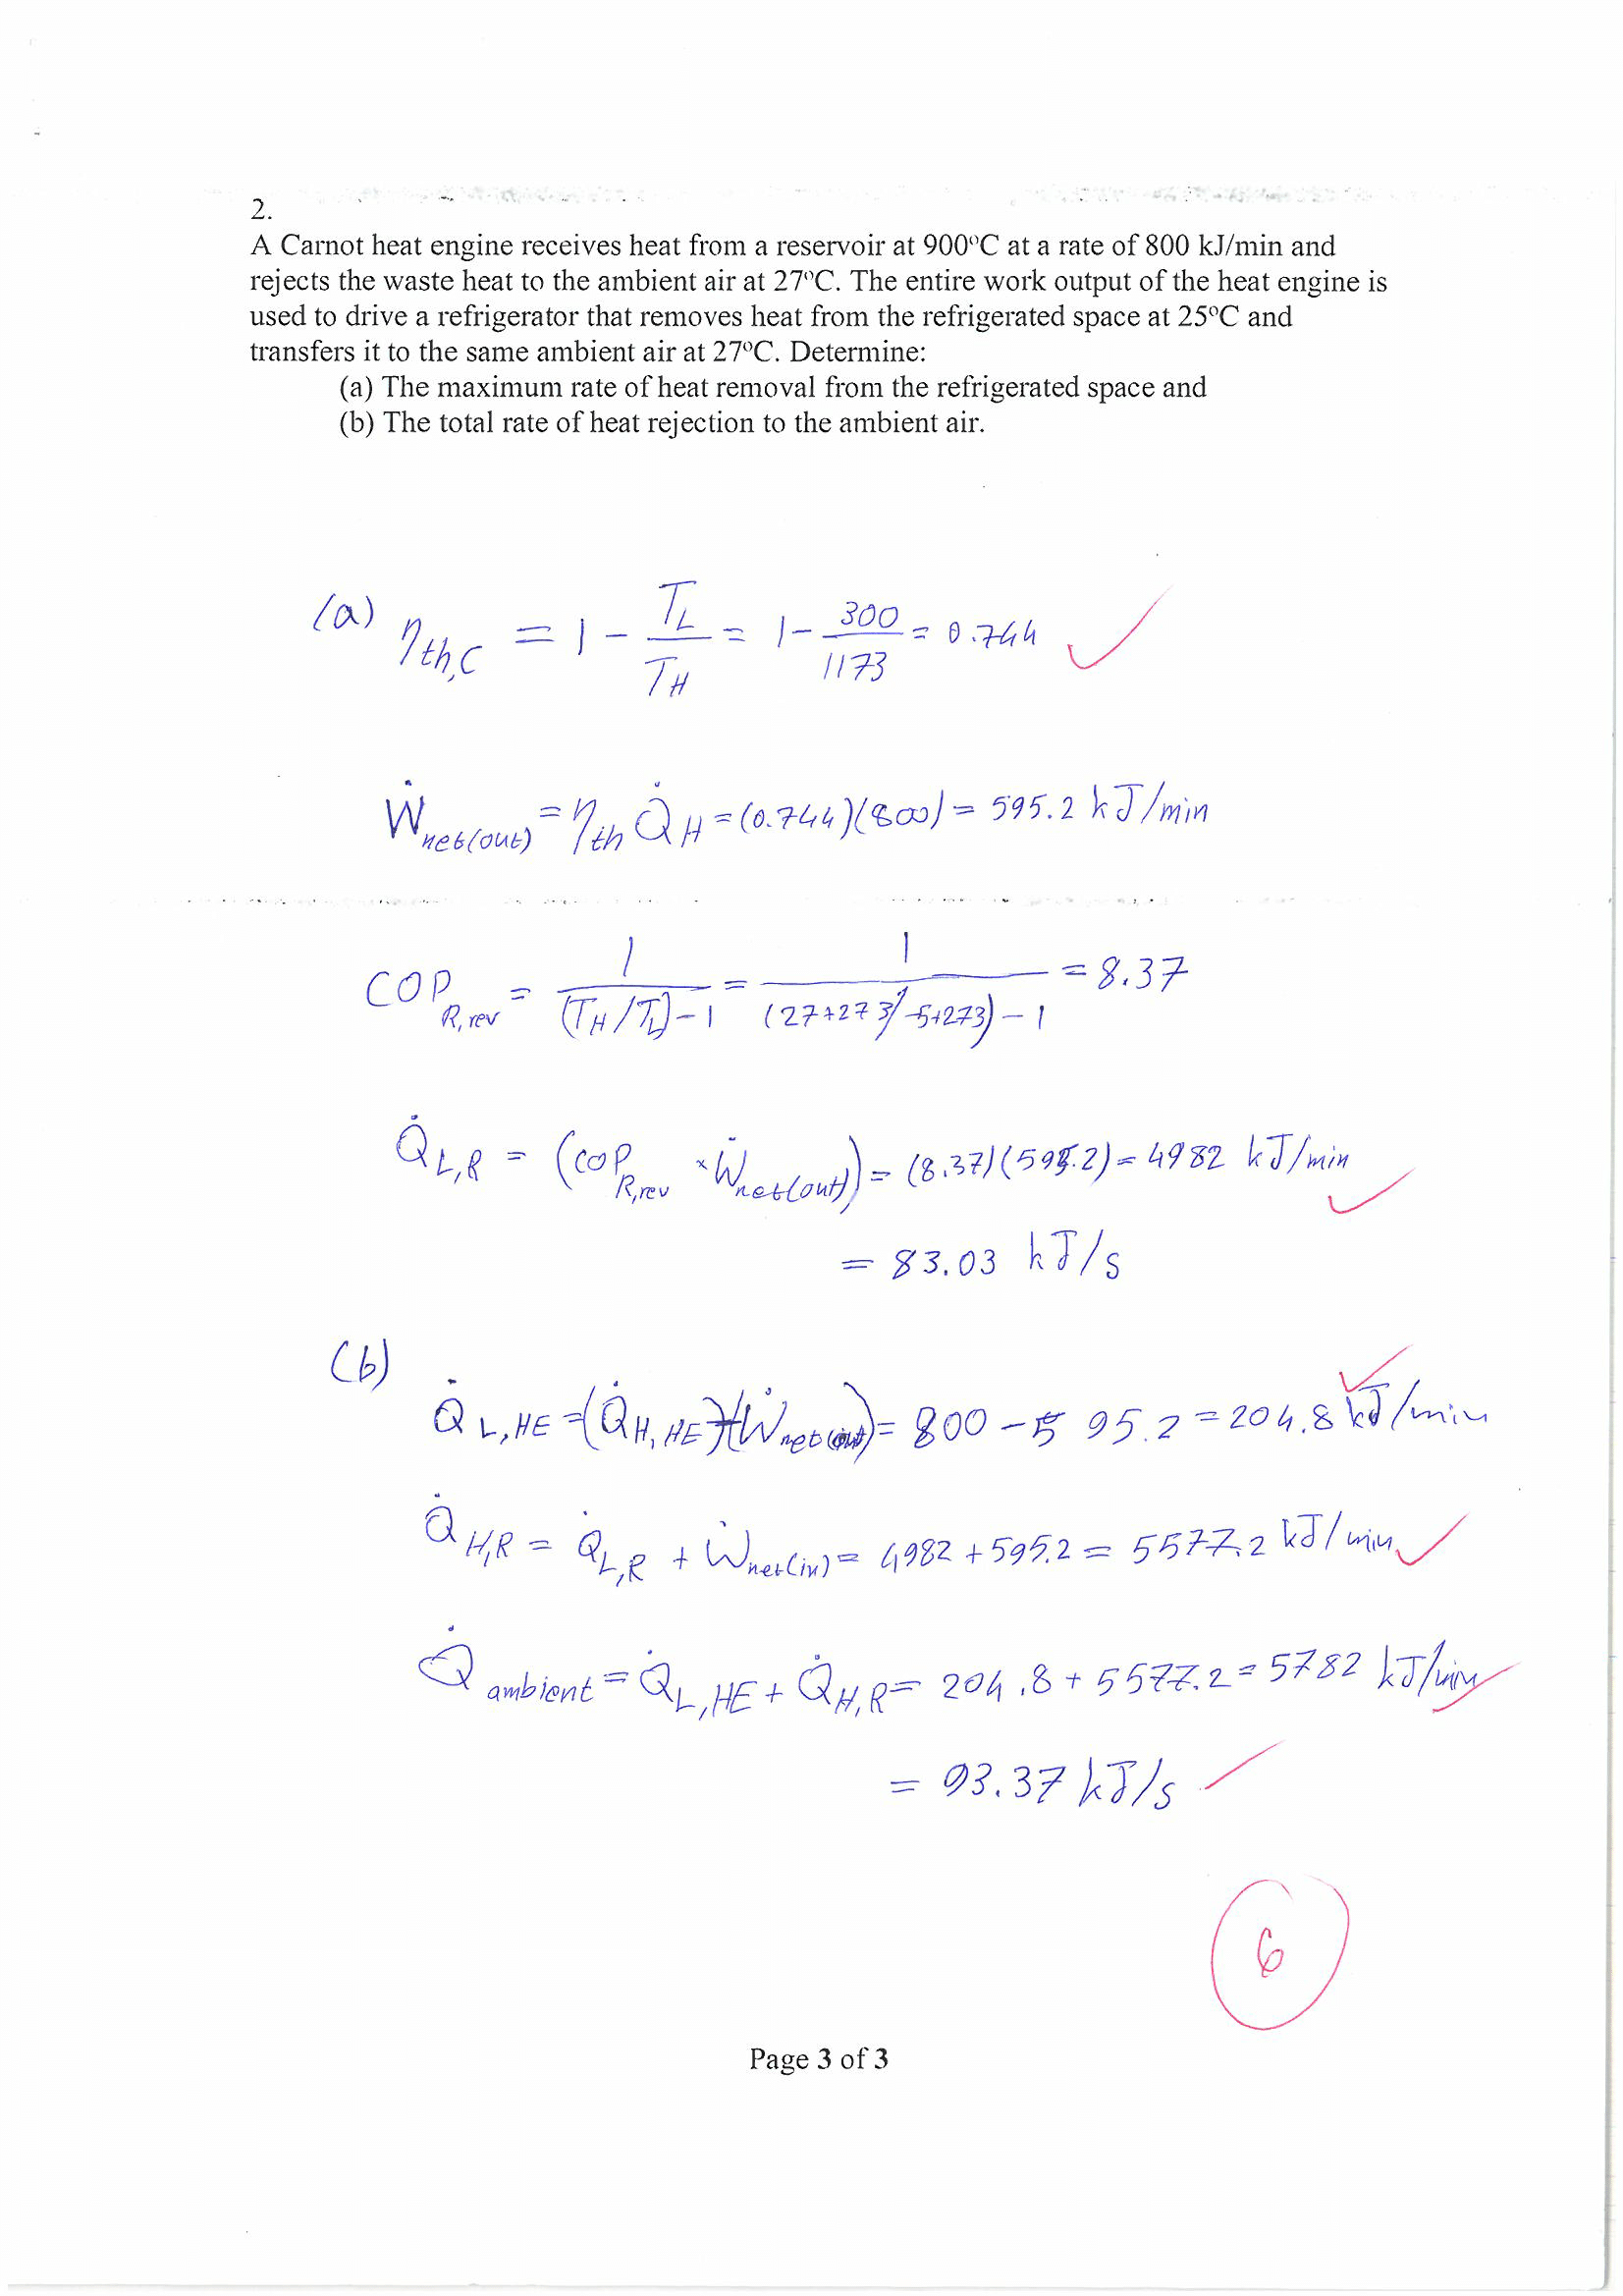 Homework 4 for Thermodynamics 2017